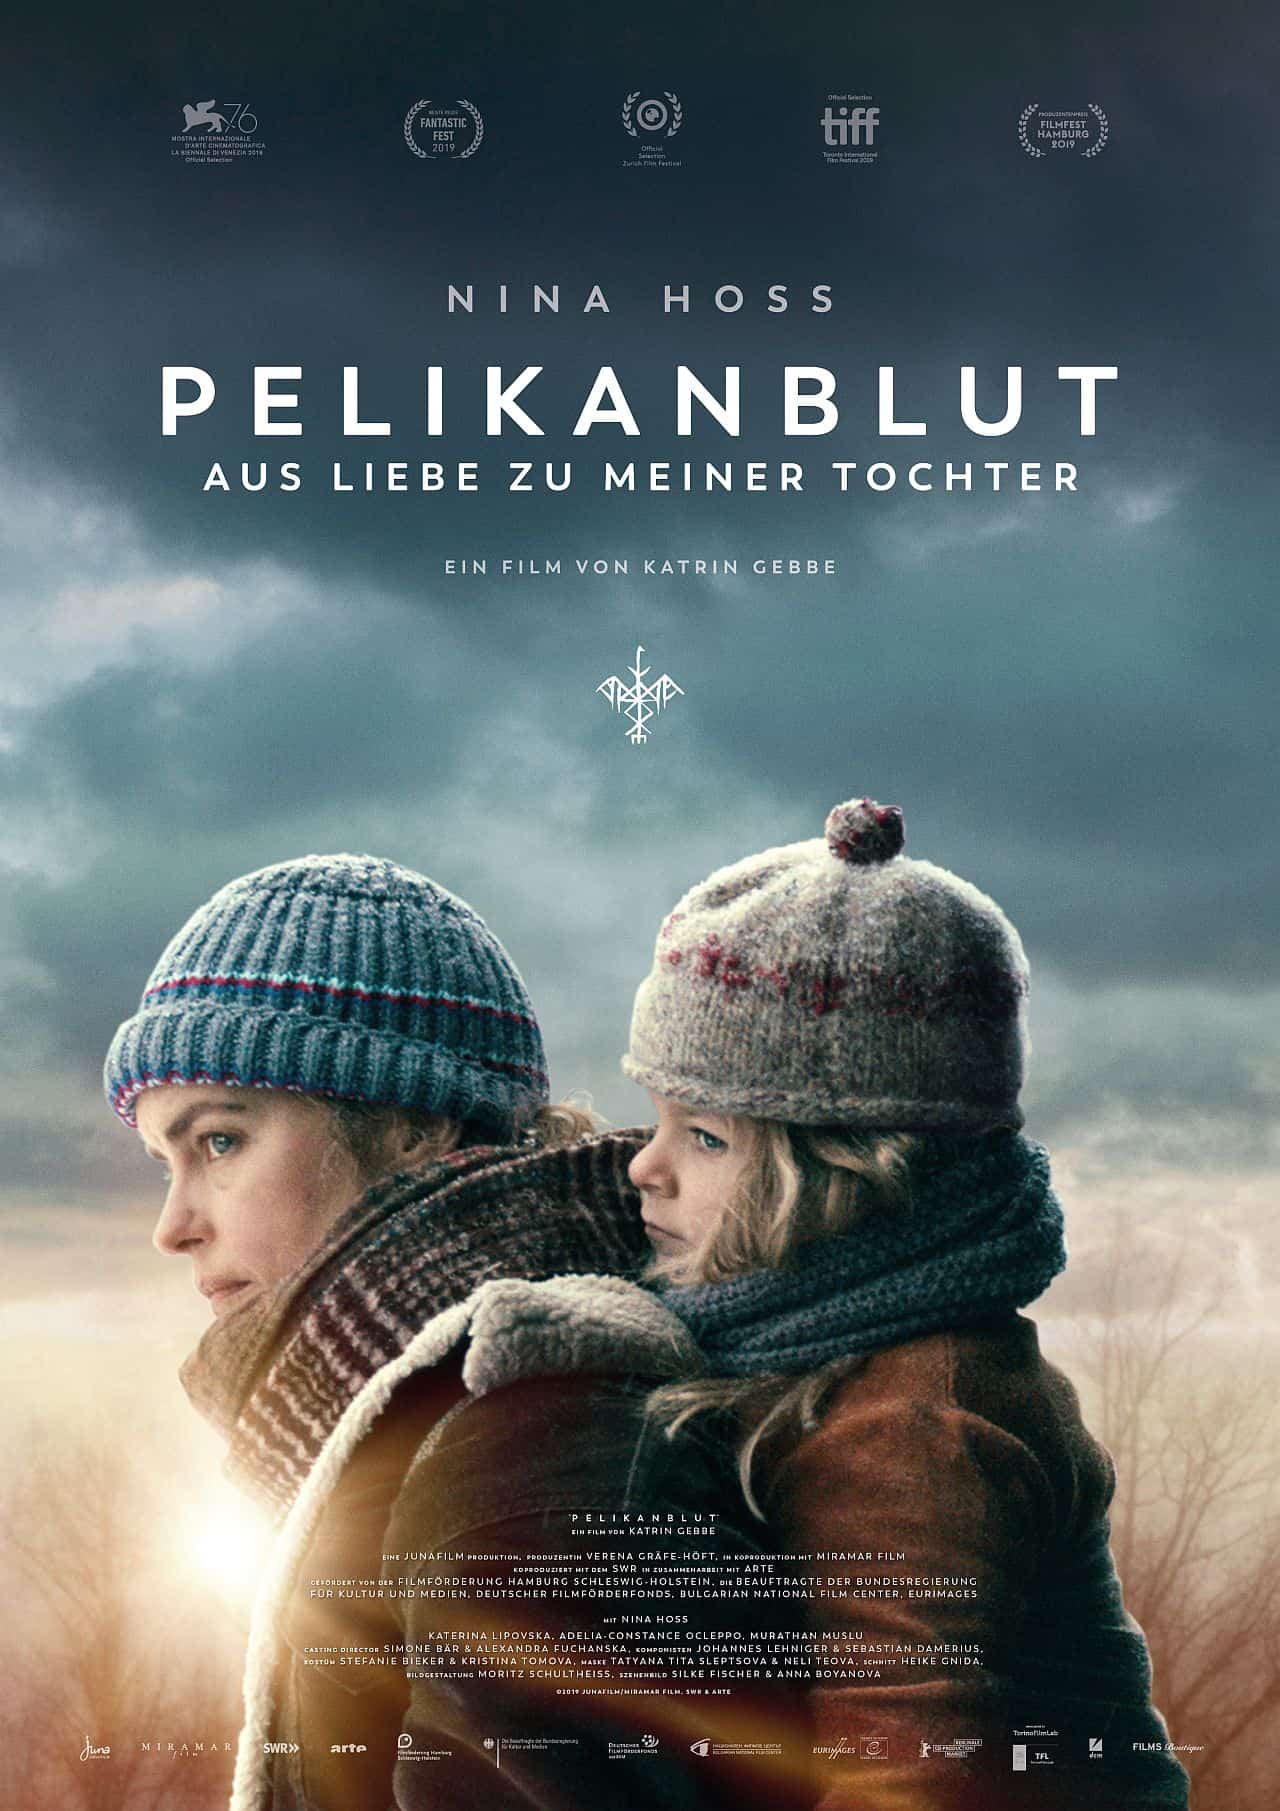 Poster zum neuen Film mit Nina Hoss peliaknblut ab 24. September im Kino